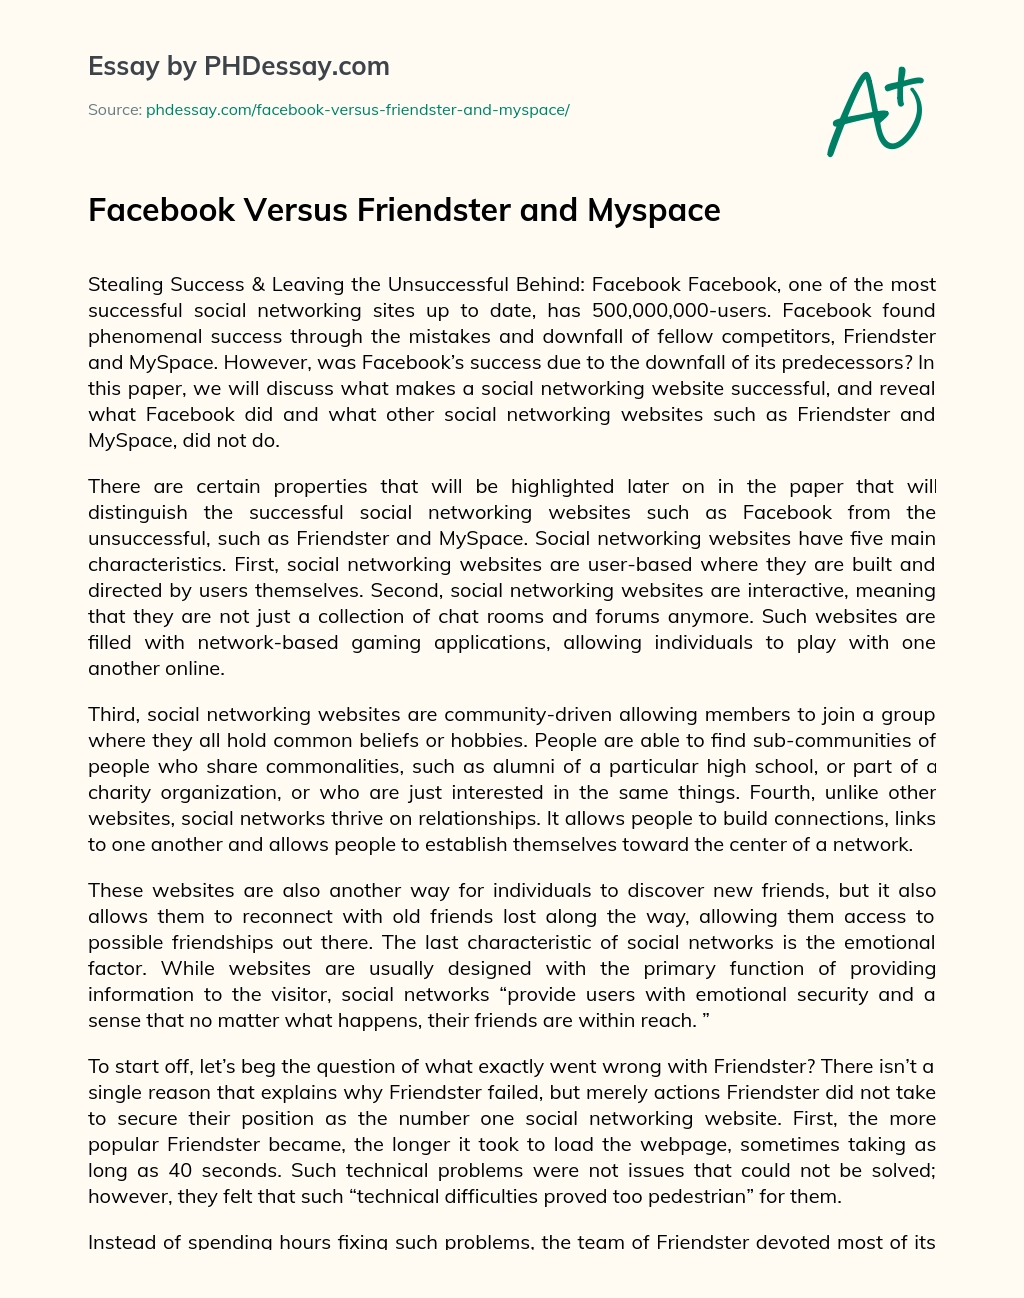 Facebook Versus Friendster and Myspace essay